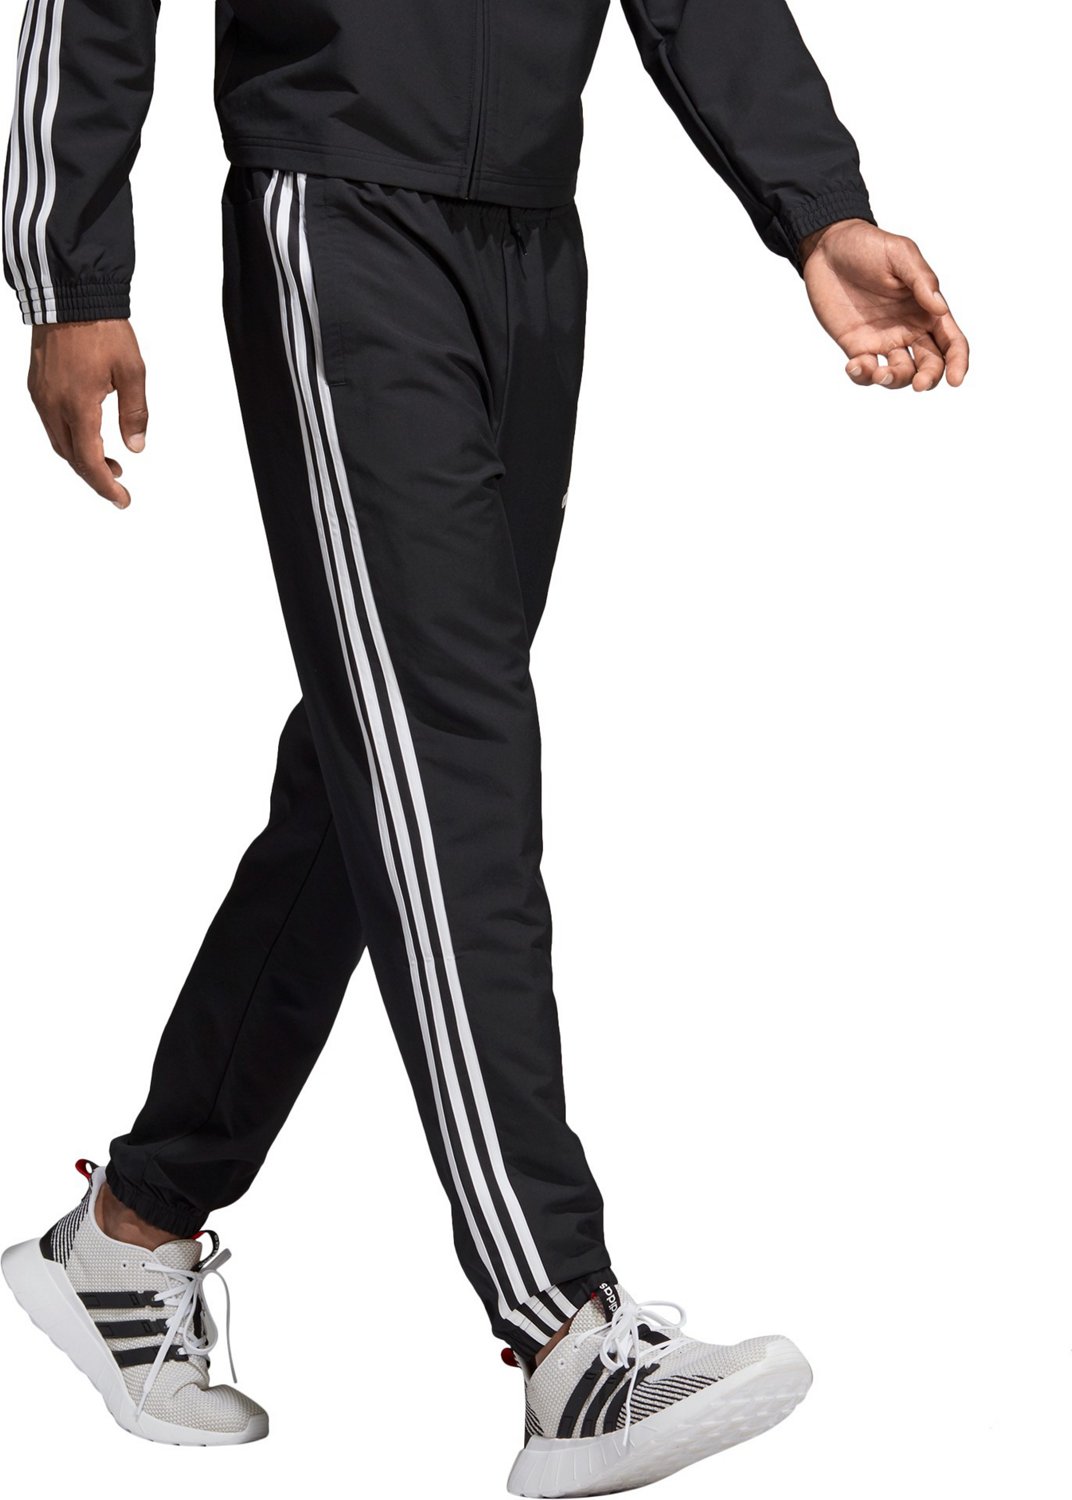 Adidas Taped Wind Pants